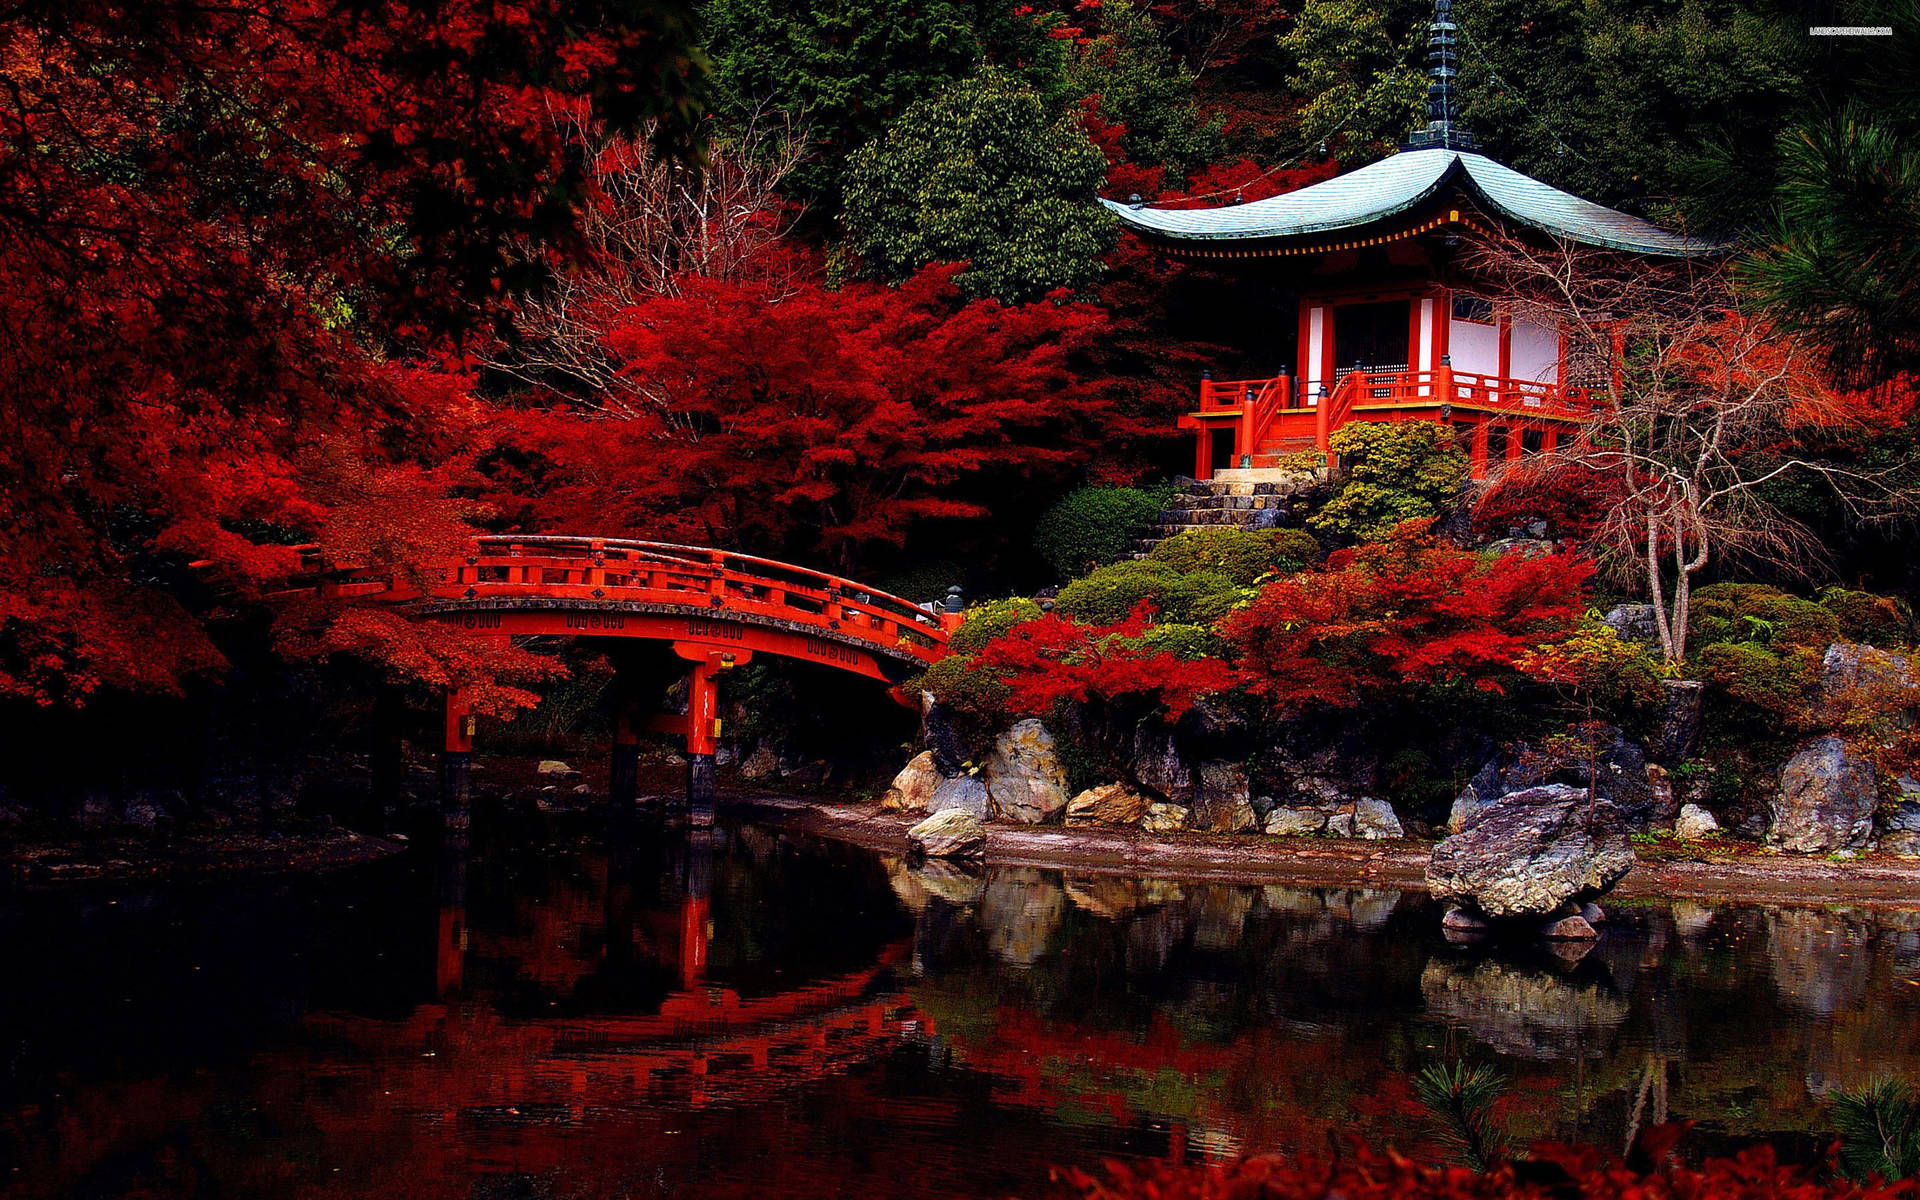 Vivid autumn leaves adorn a majestic Shinto Shrine in Japan. Wallpaper